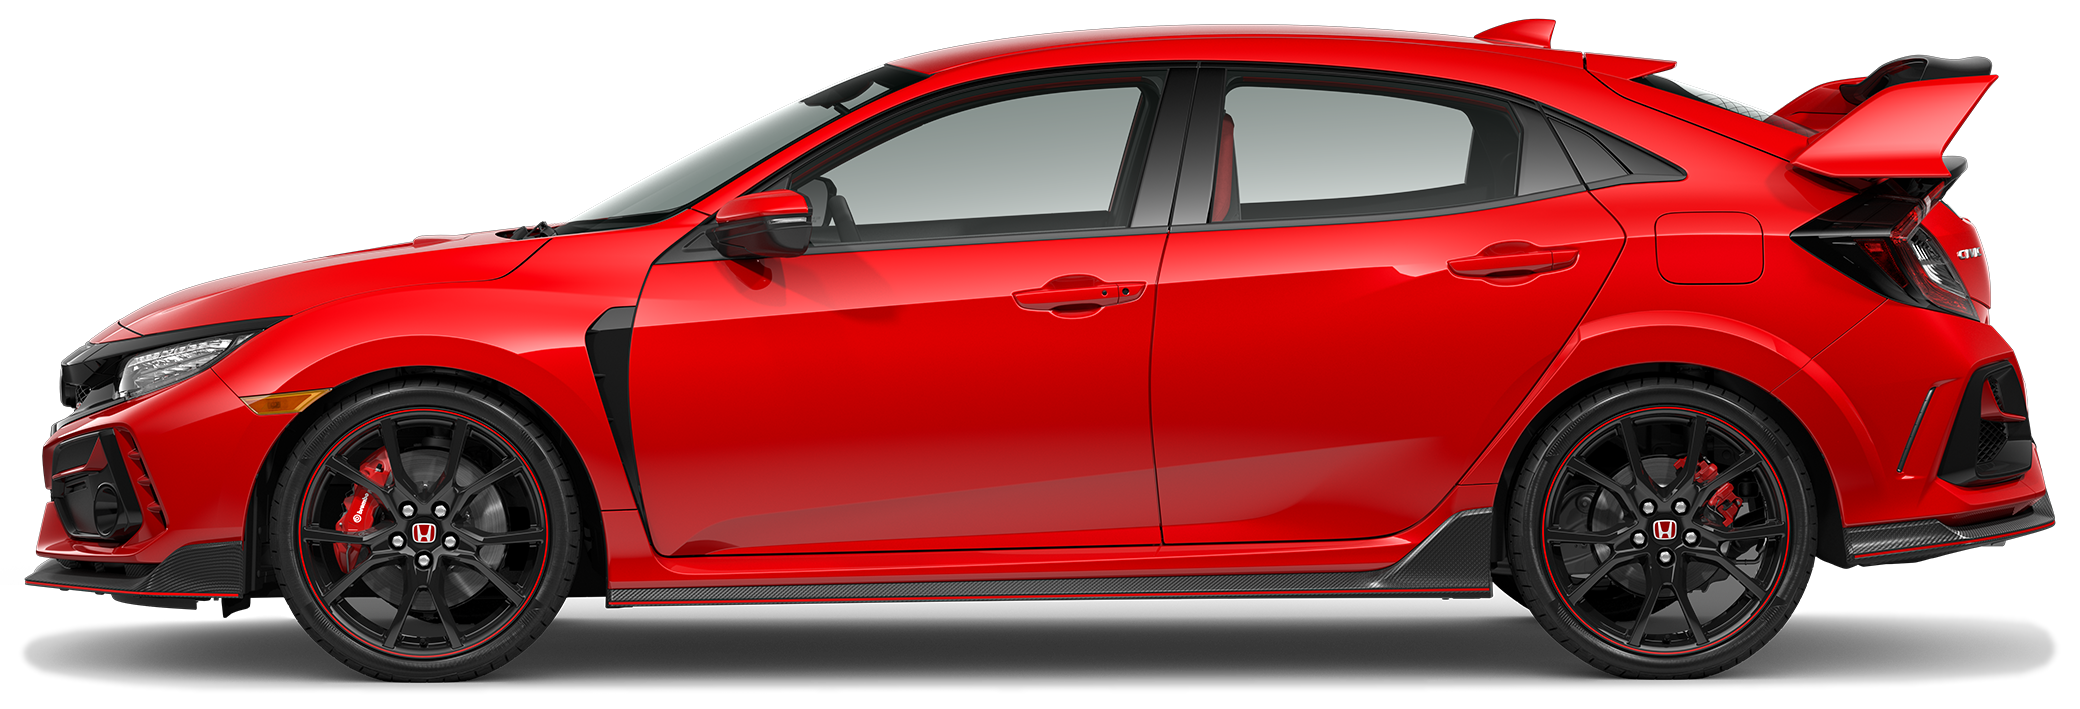 2021 Honda Civic Type R Hatchback 